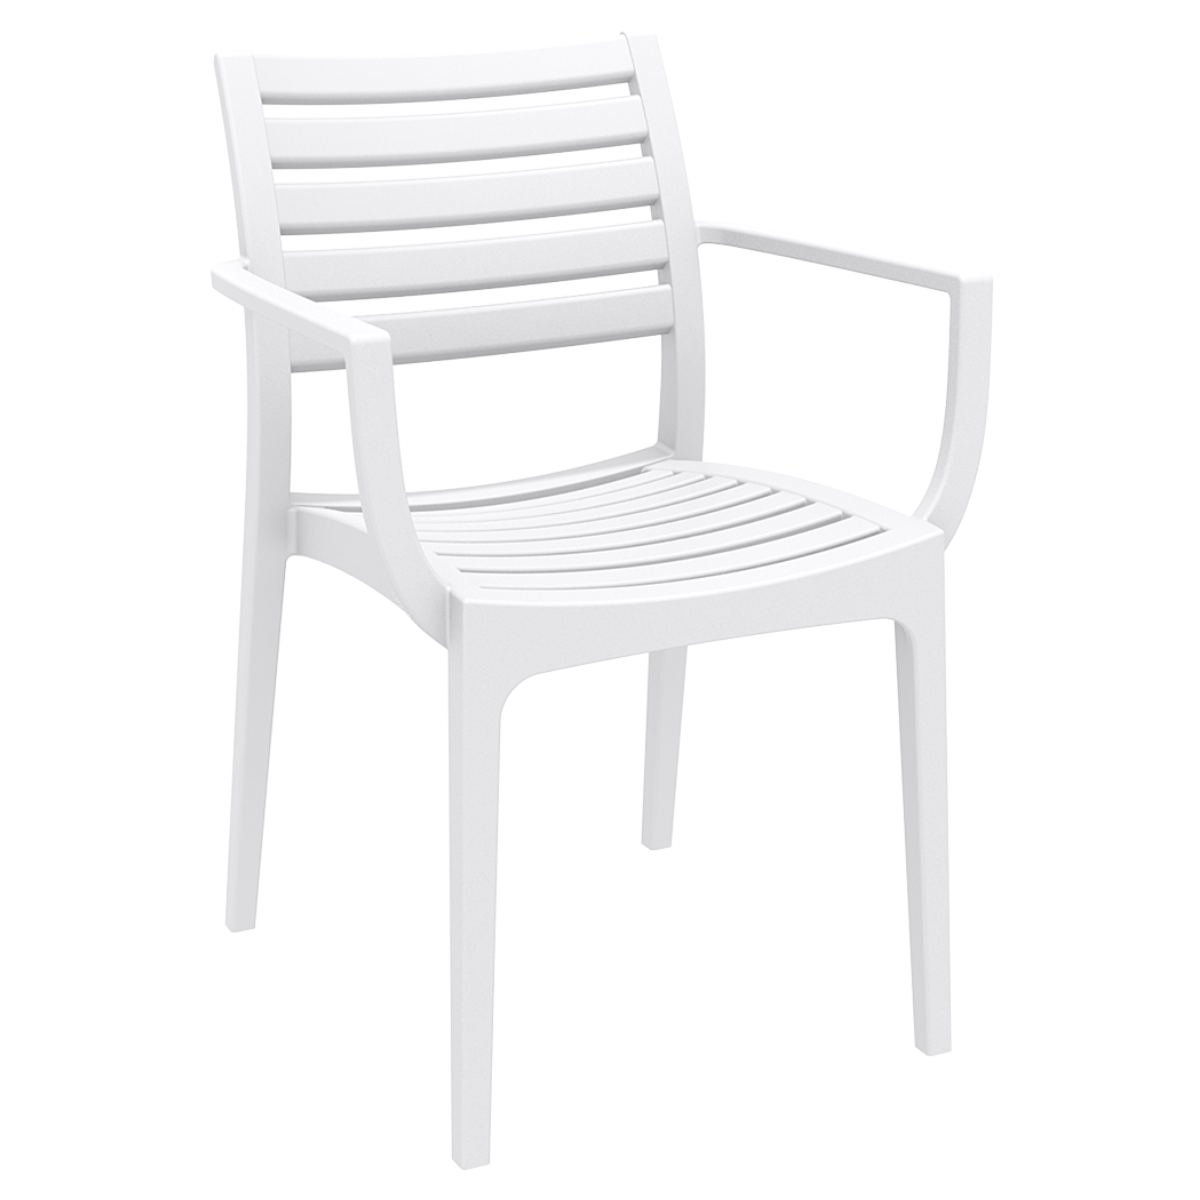 ST ARTEMIS Fehér design Műanyag kültéri szék